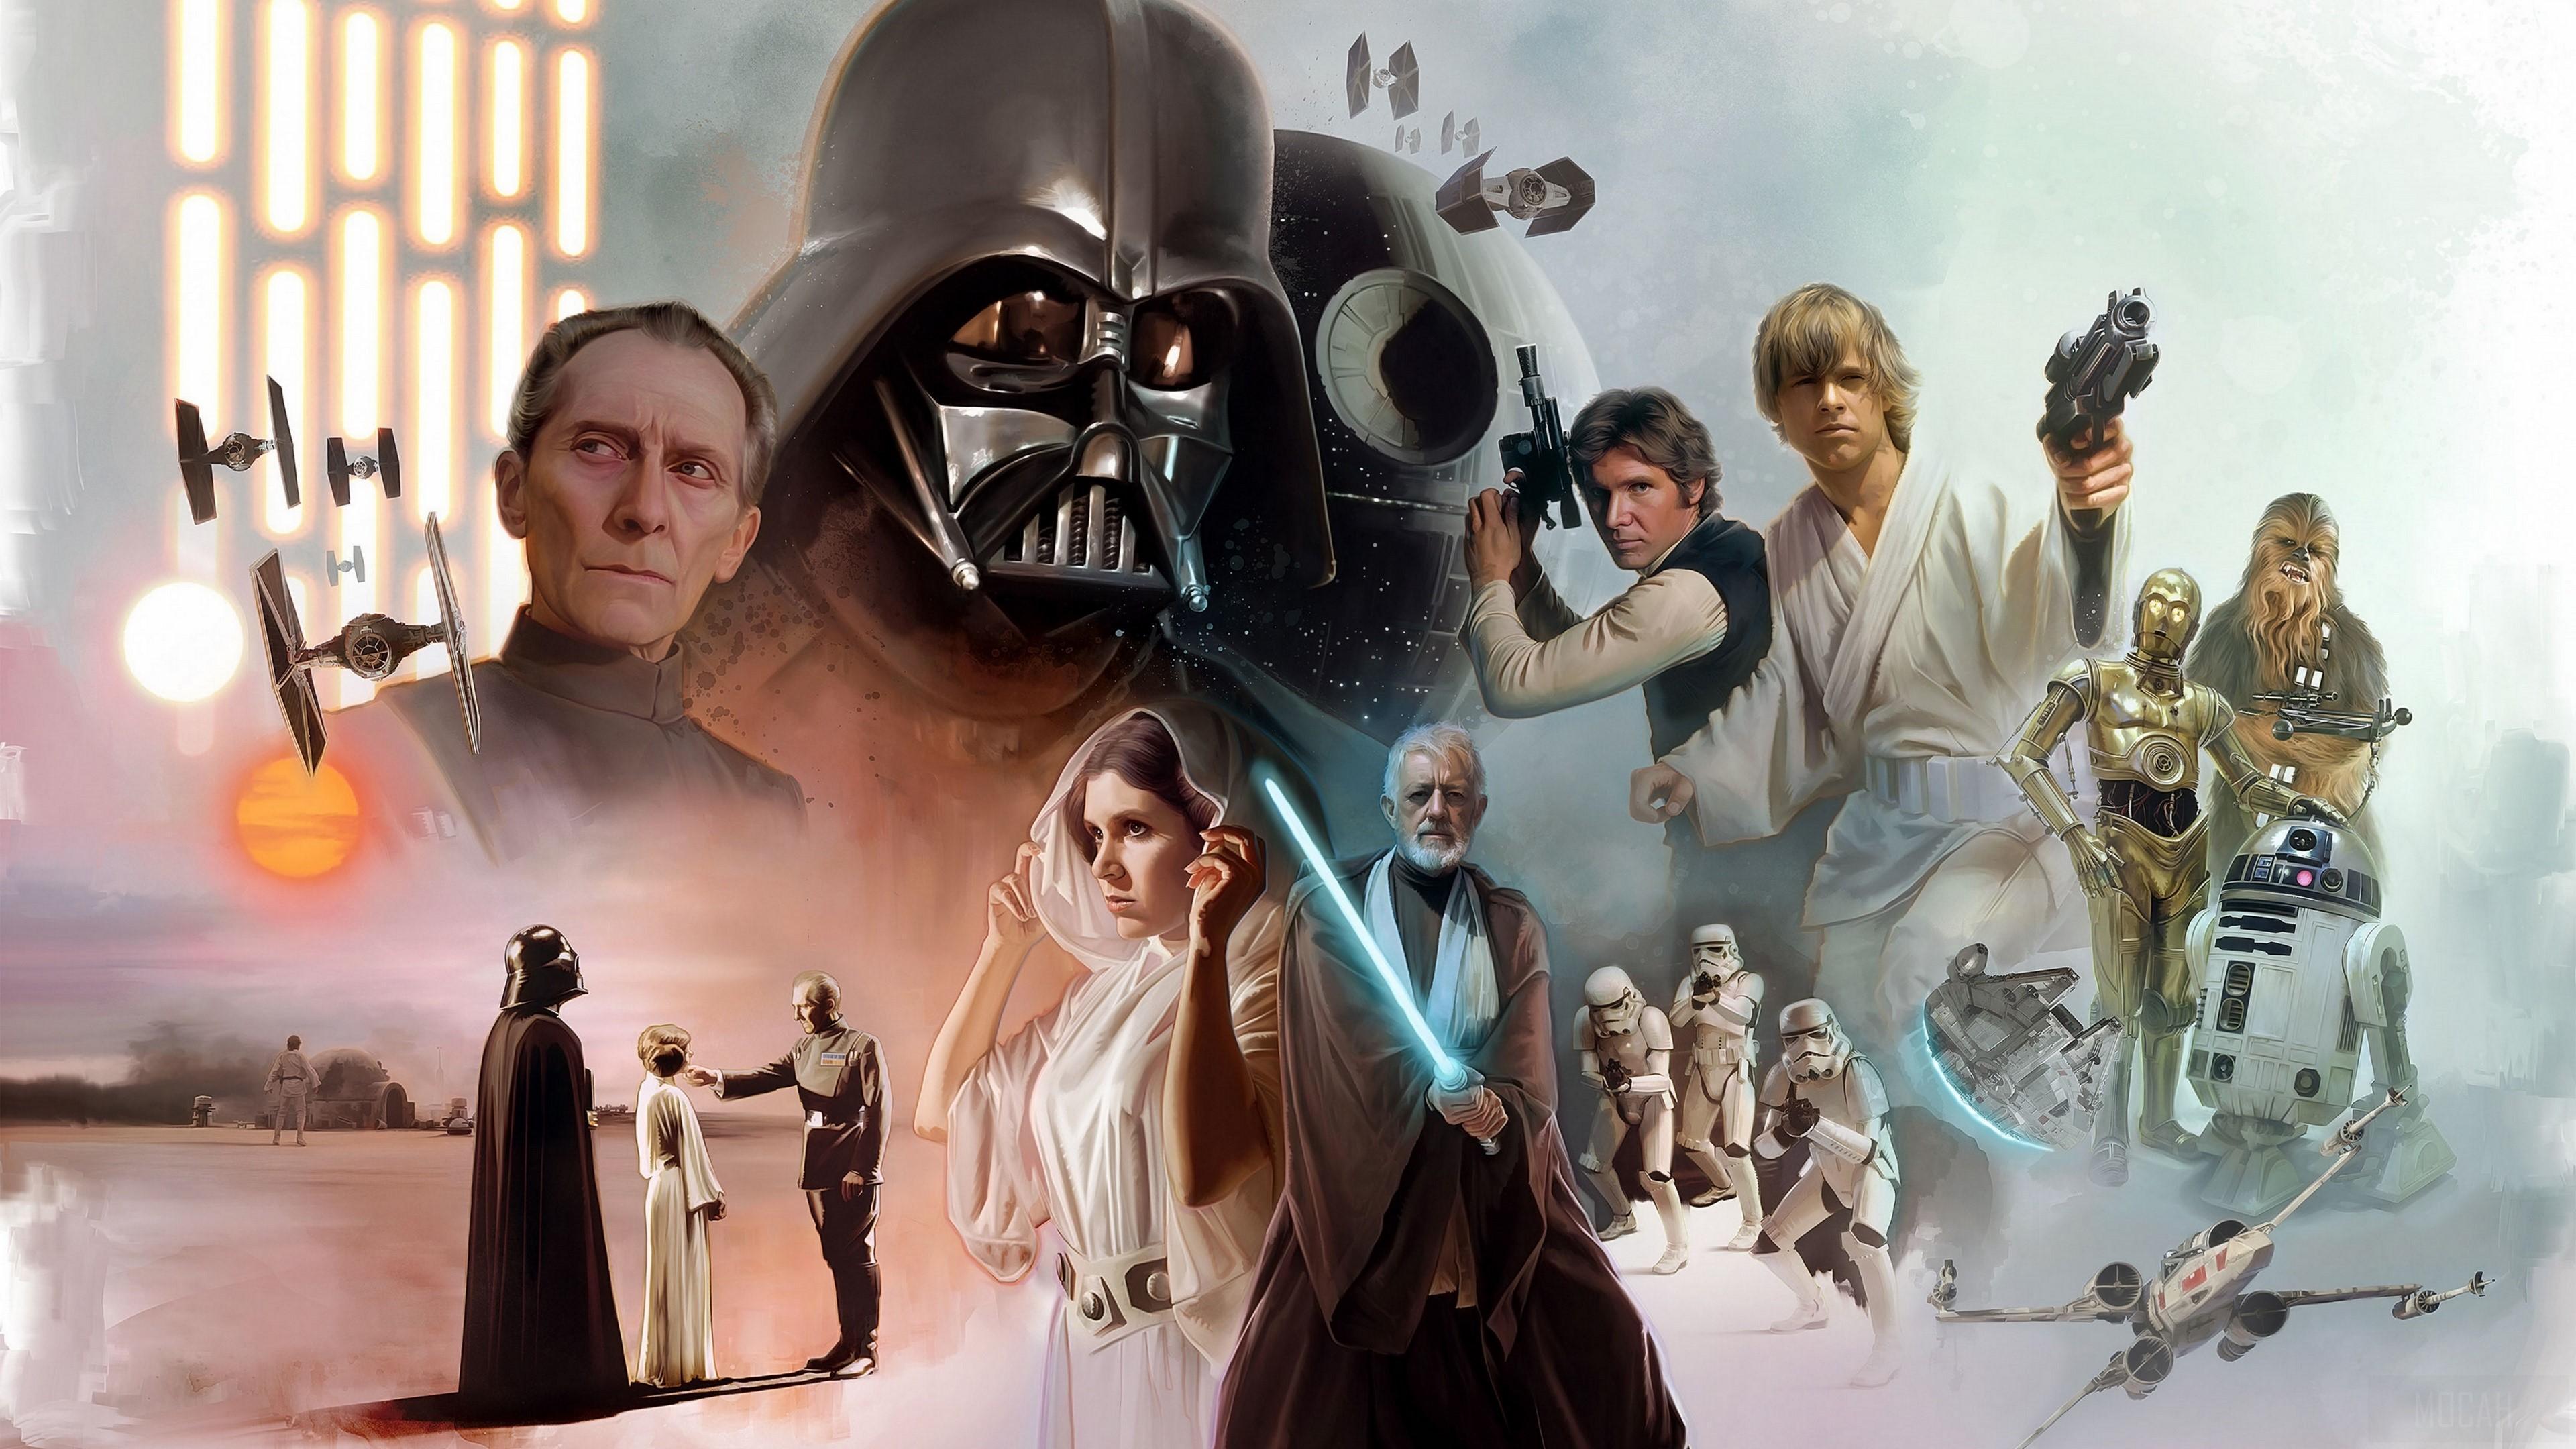 HD wallpaper, Star Wars, R2 D2, Darth Vader, C 3Po, Death Star, Han Solo, Obi Wan Kenobi, Luke Skywalker, Stormtrooper, Princess Leia, Chewbacca, Wilhuff Tarkin 4K